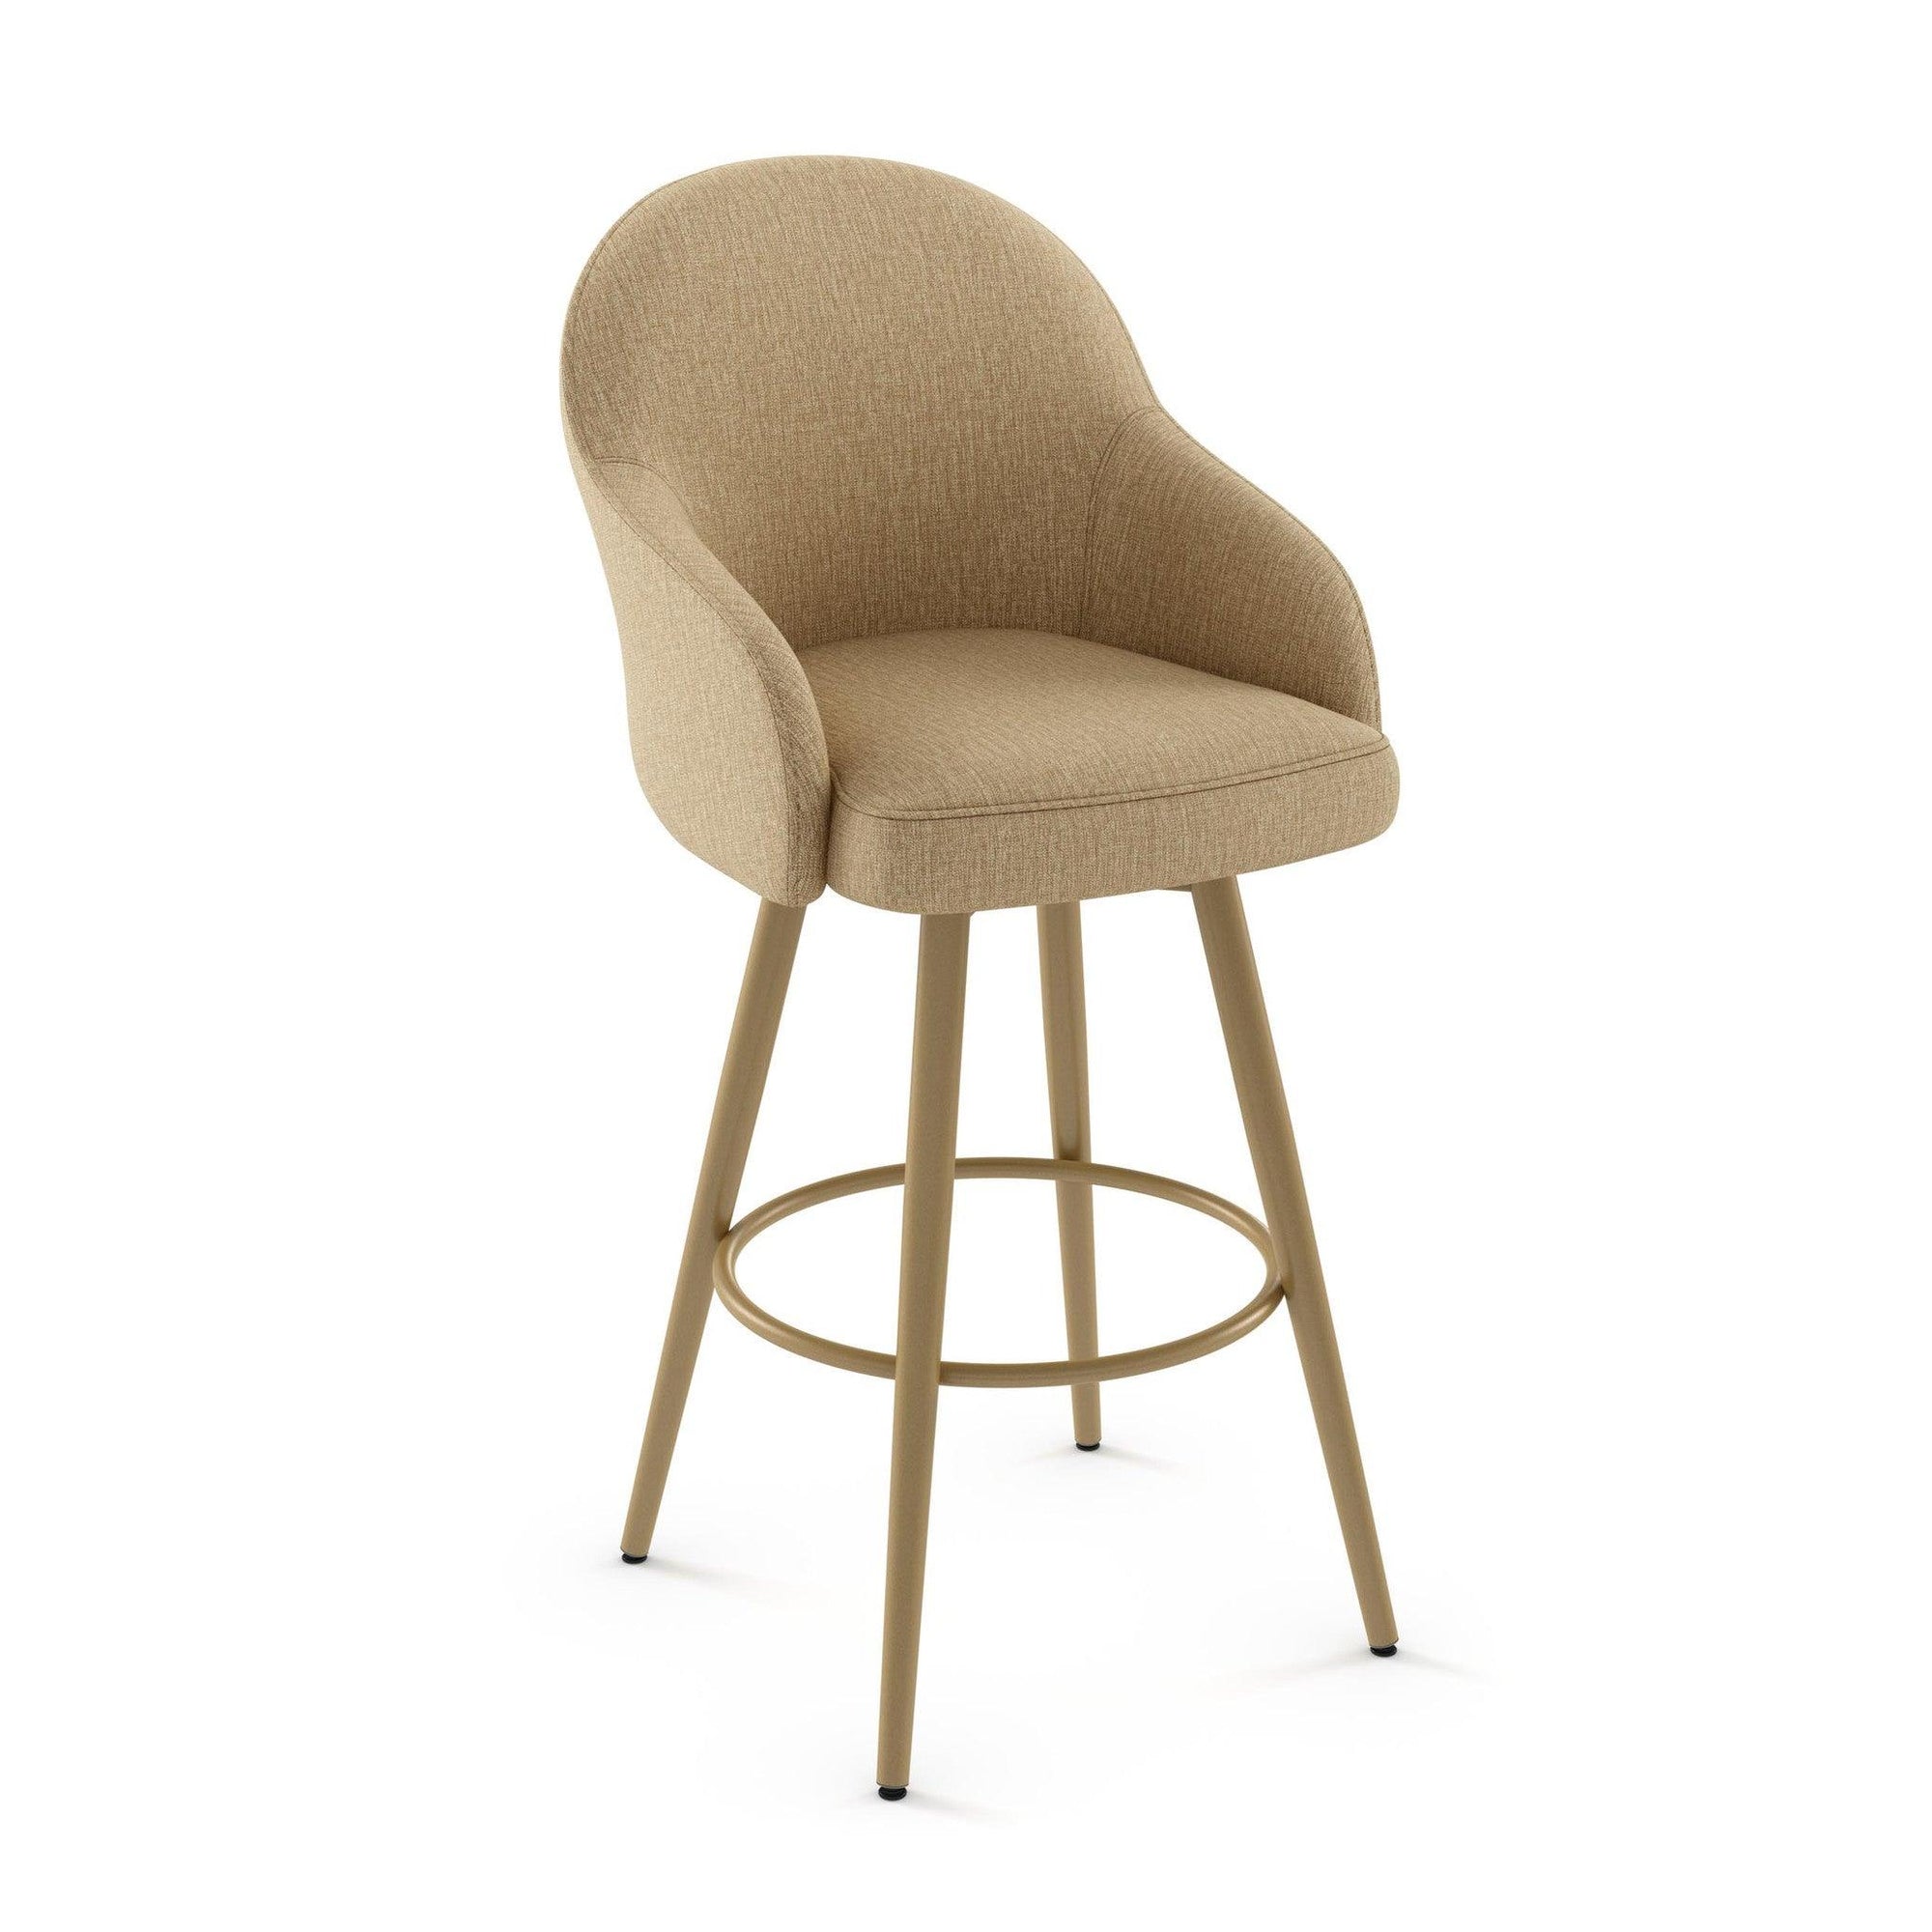 Weston swivel stool - Euro Living Furniture